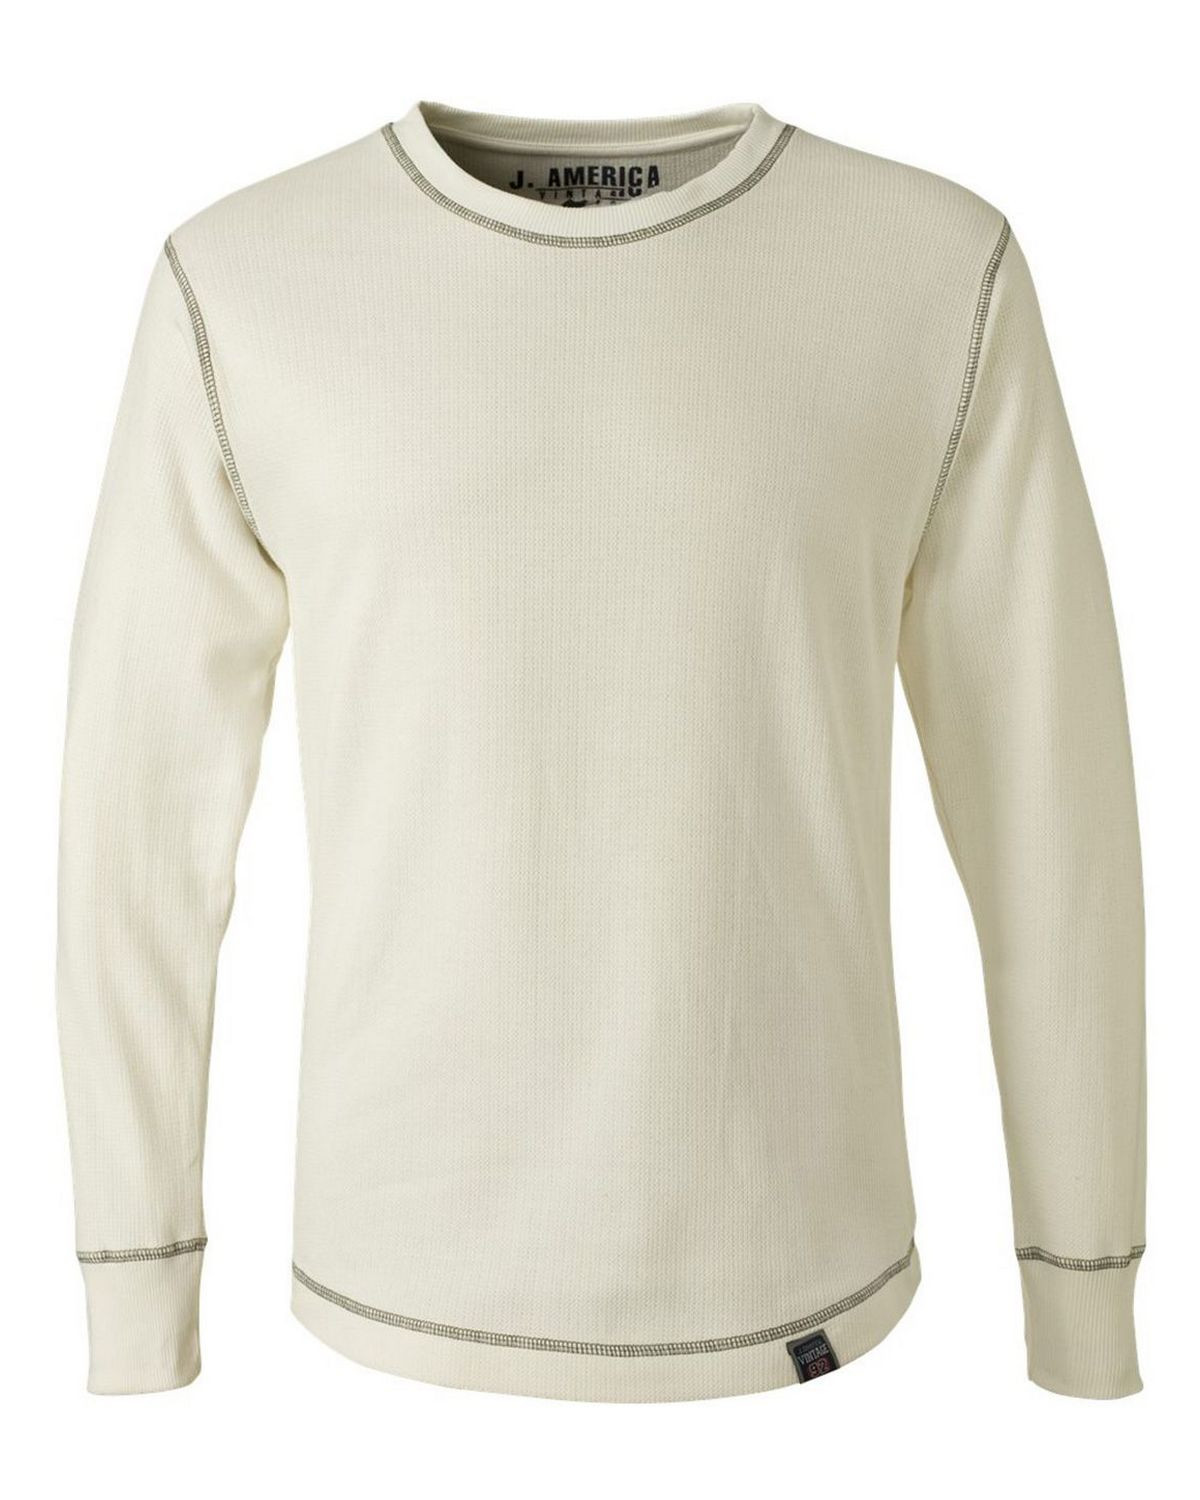 J America 8238 Men's Vintage Long Sleeve Thermal T-Shirt - Vintage White/ Charcoal - S #vintage